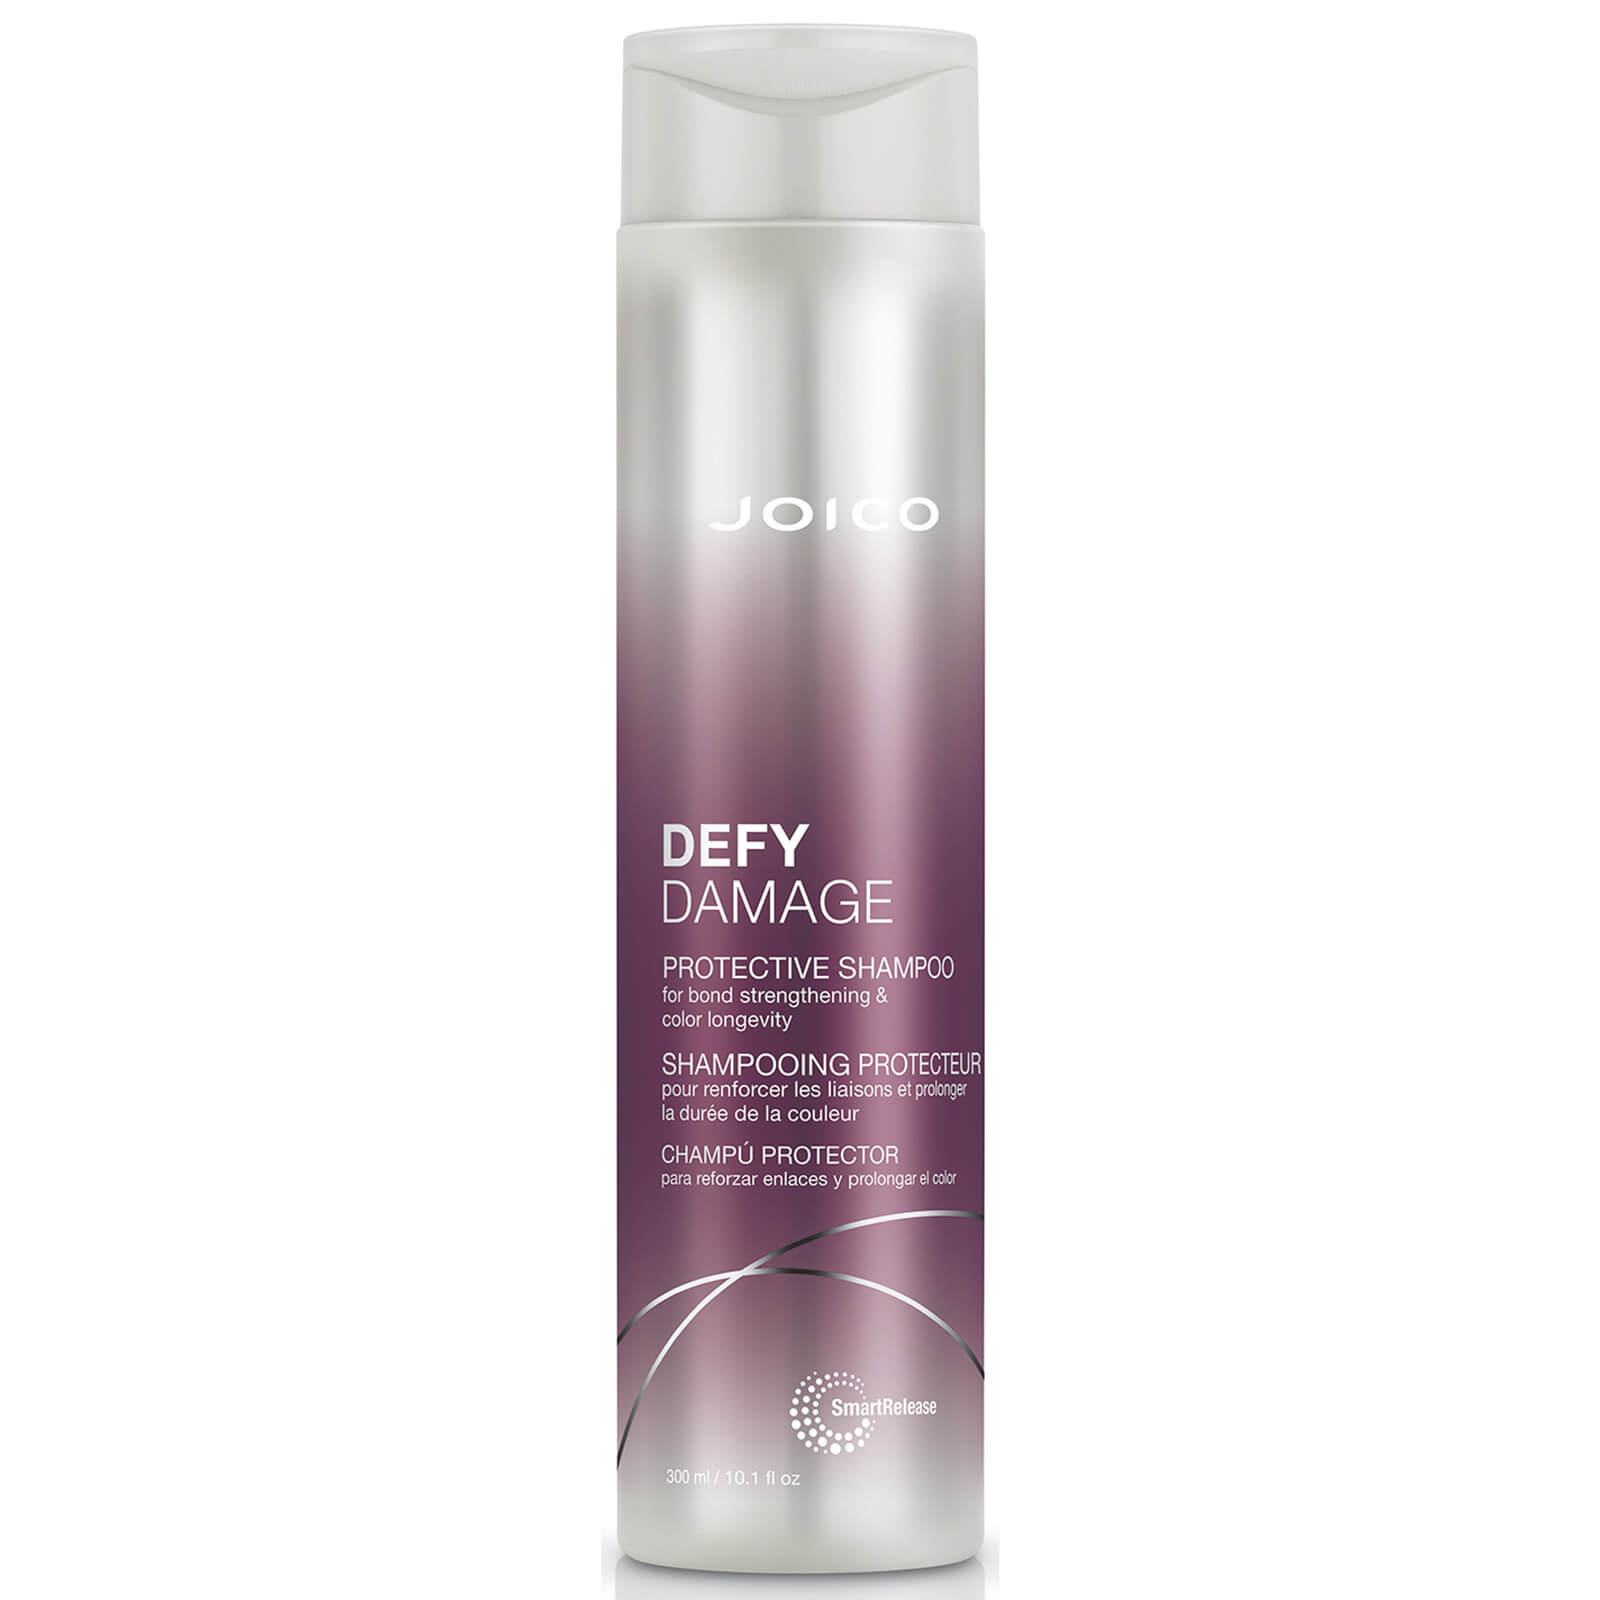 Joico Defy Damage Protective Shampoo 300ml (echtprodukt - Wert £36,99)